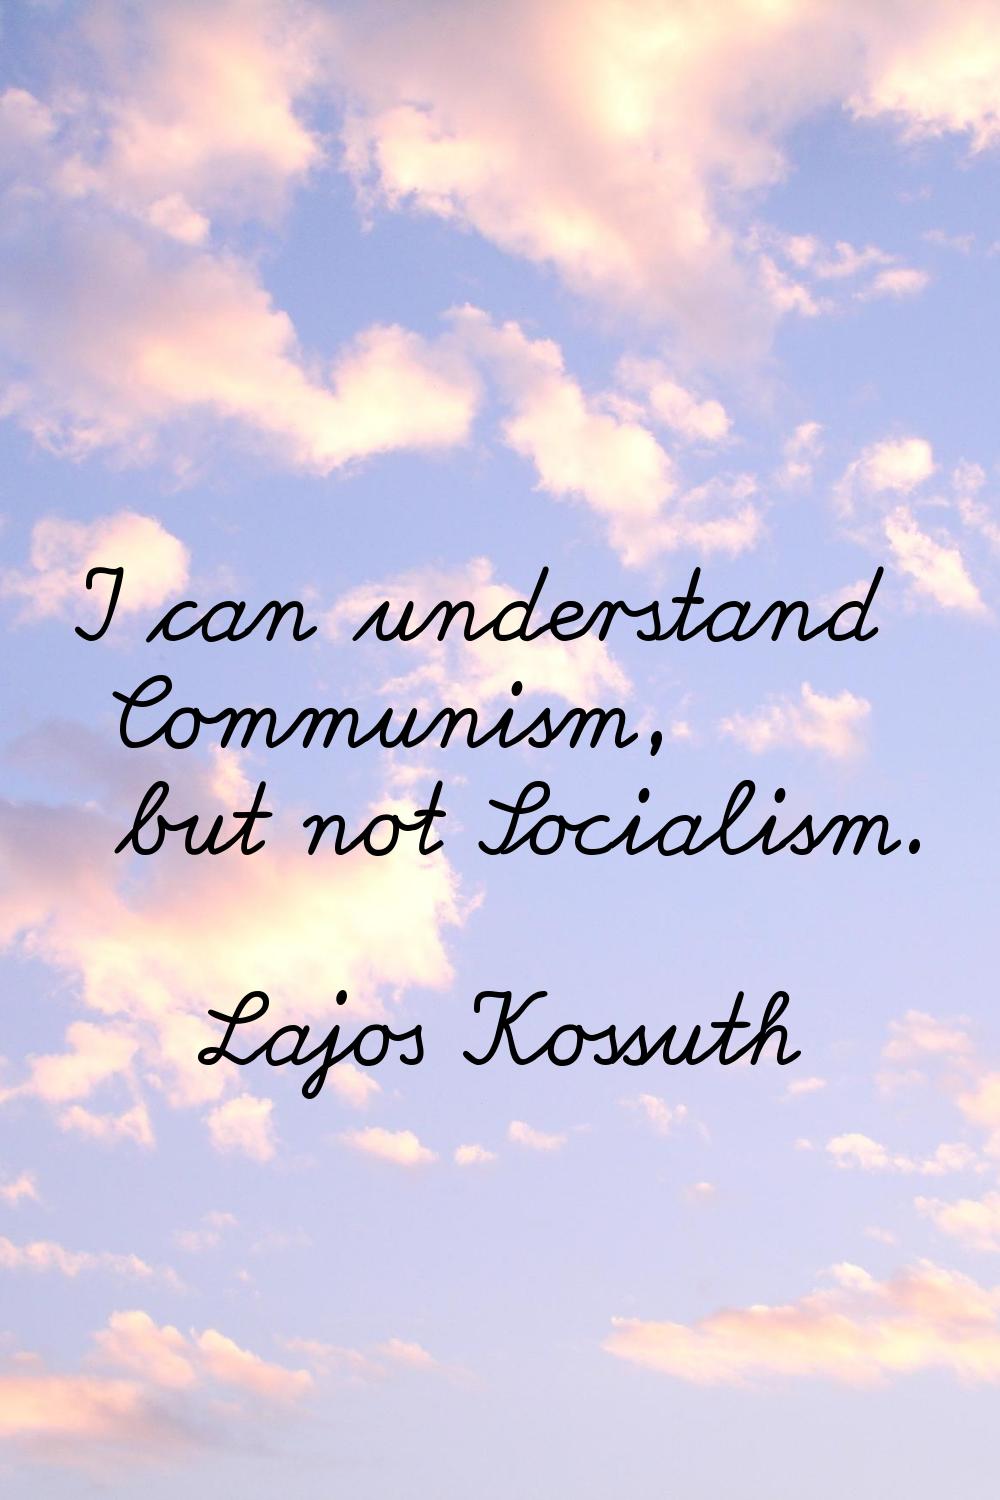 I can understand Communism, but not Socialism.